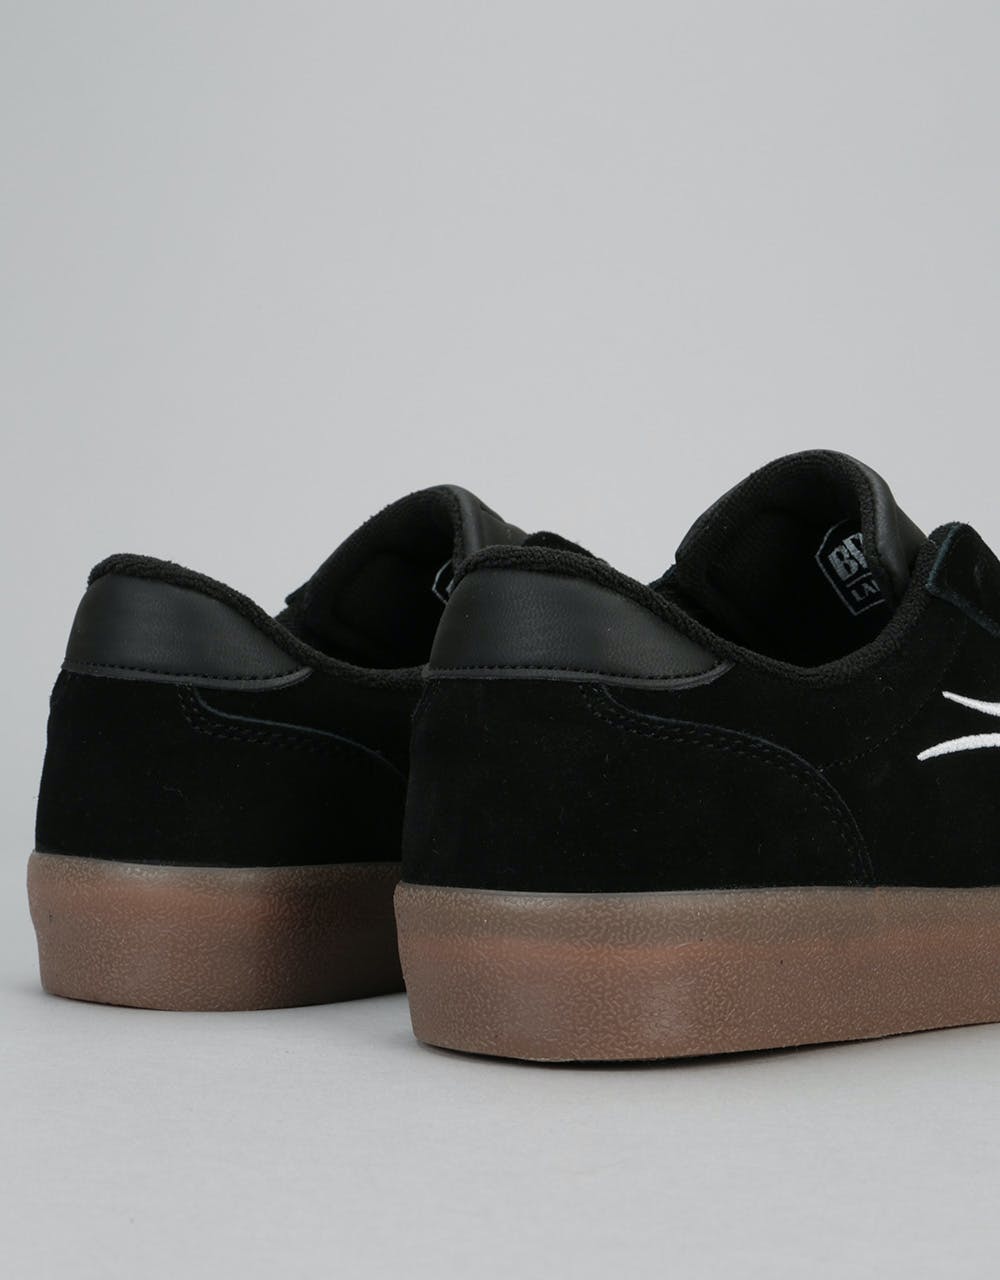 Lakai Salford Skate Shoes - Black/Gum Suede